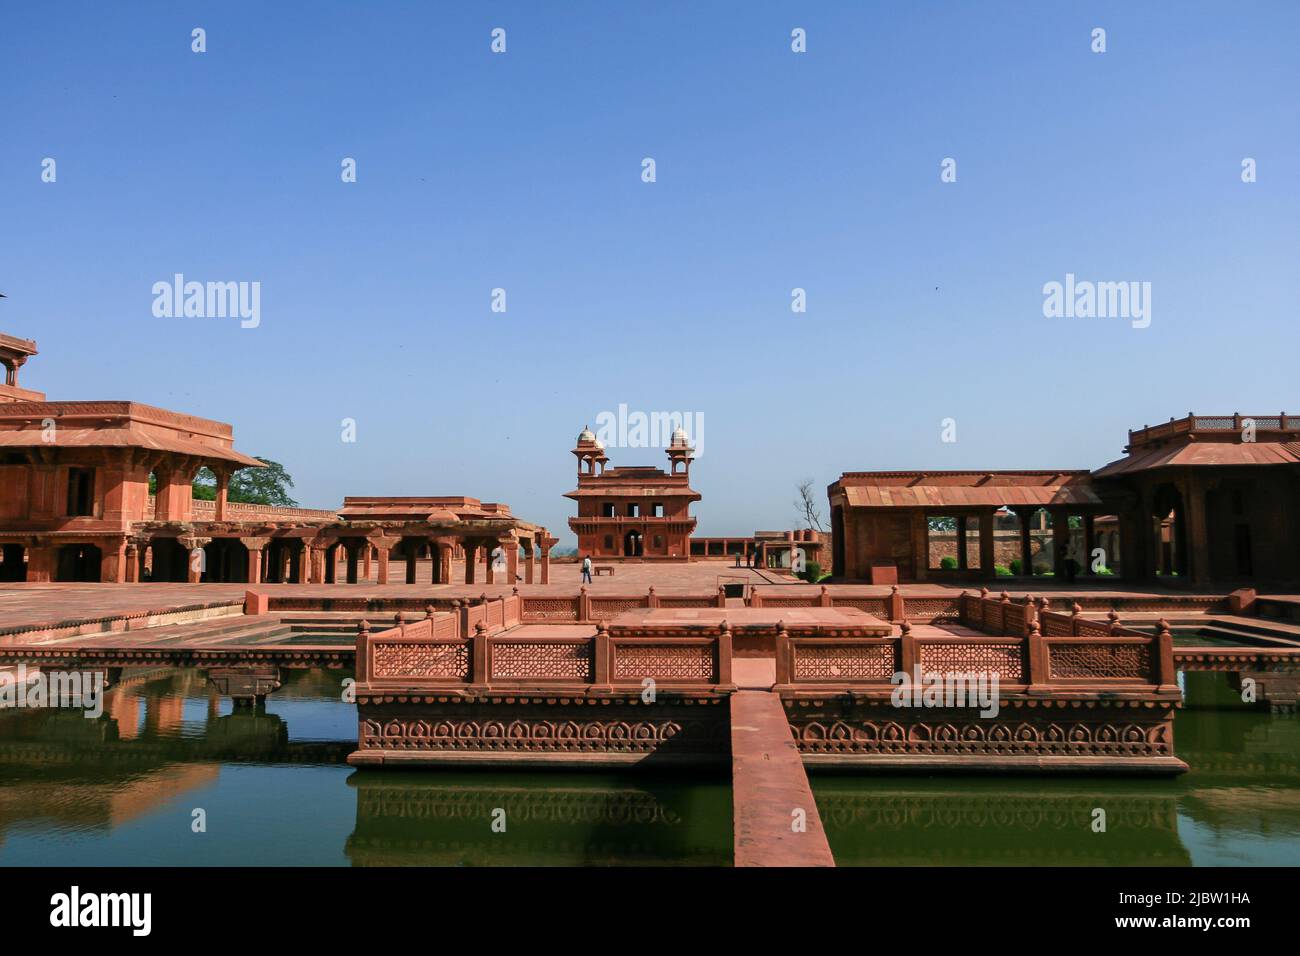 15th Century Mughal Emperor Akbar's Court Anup Talao at Fatehpur Sikri, Agra, Uttar Pradesh, India. Stock Photo